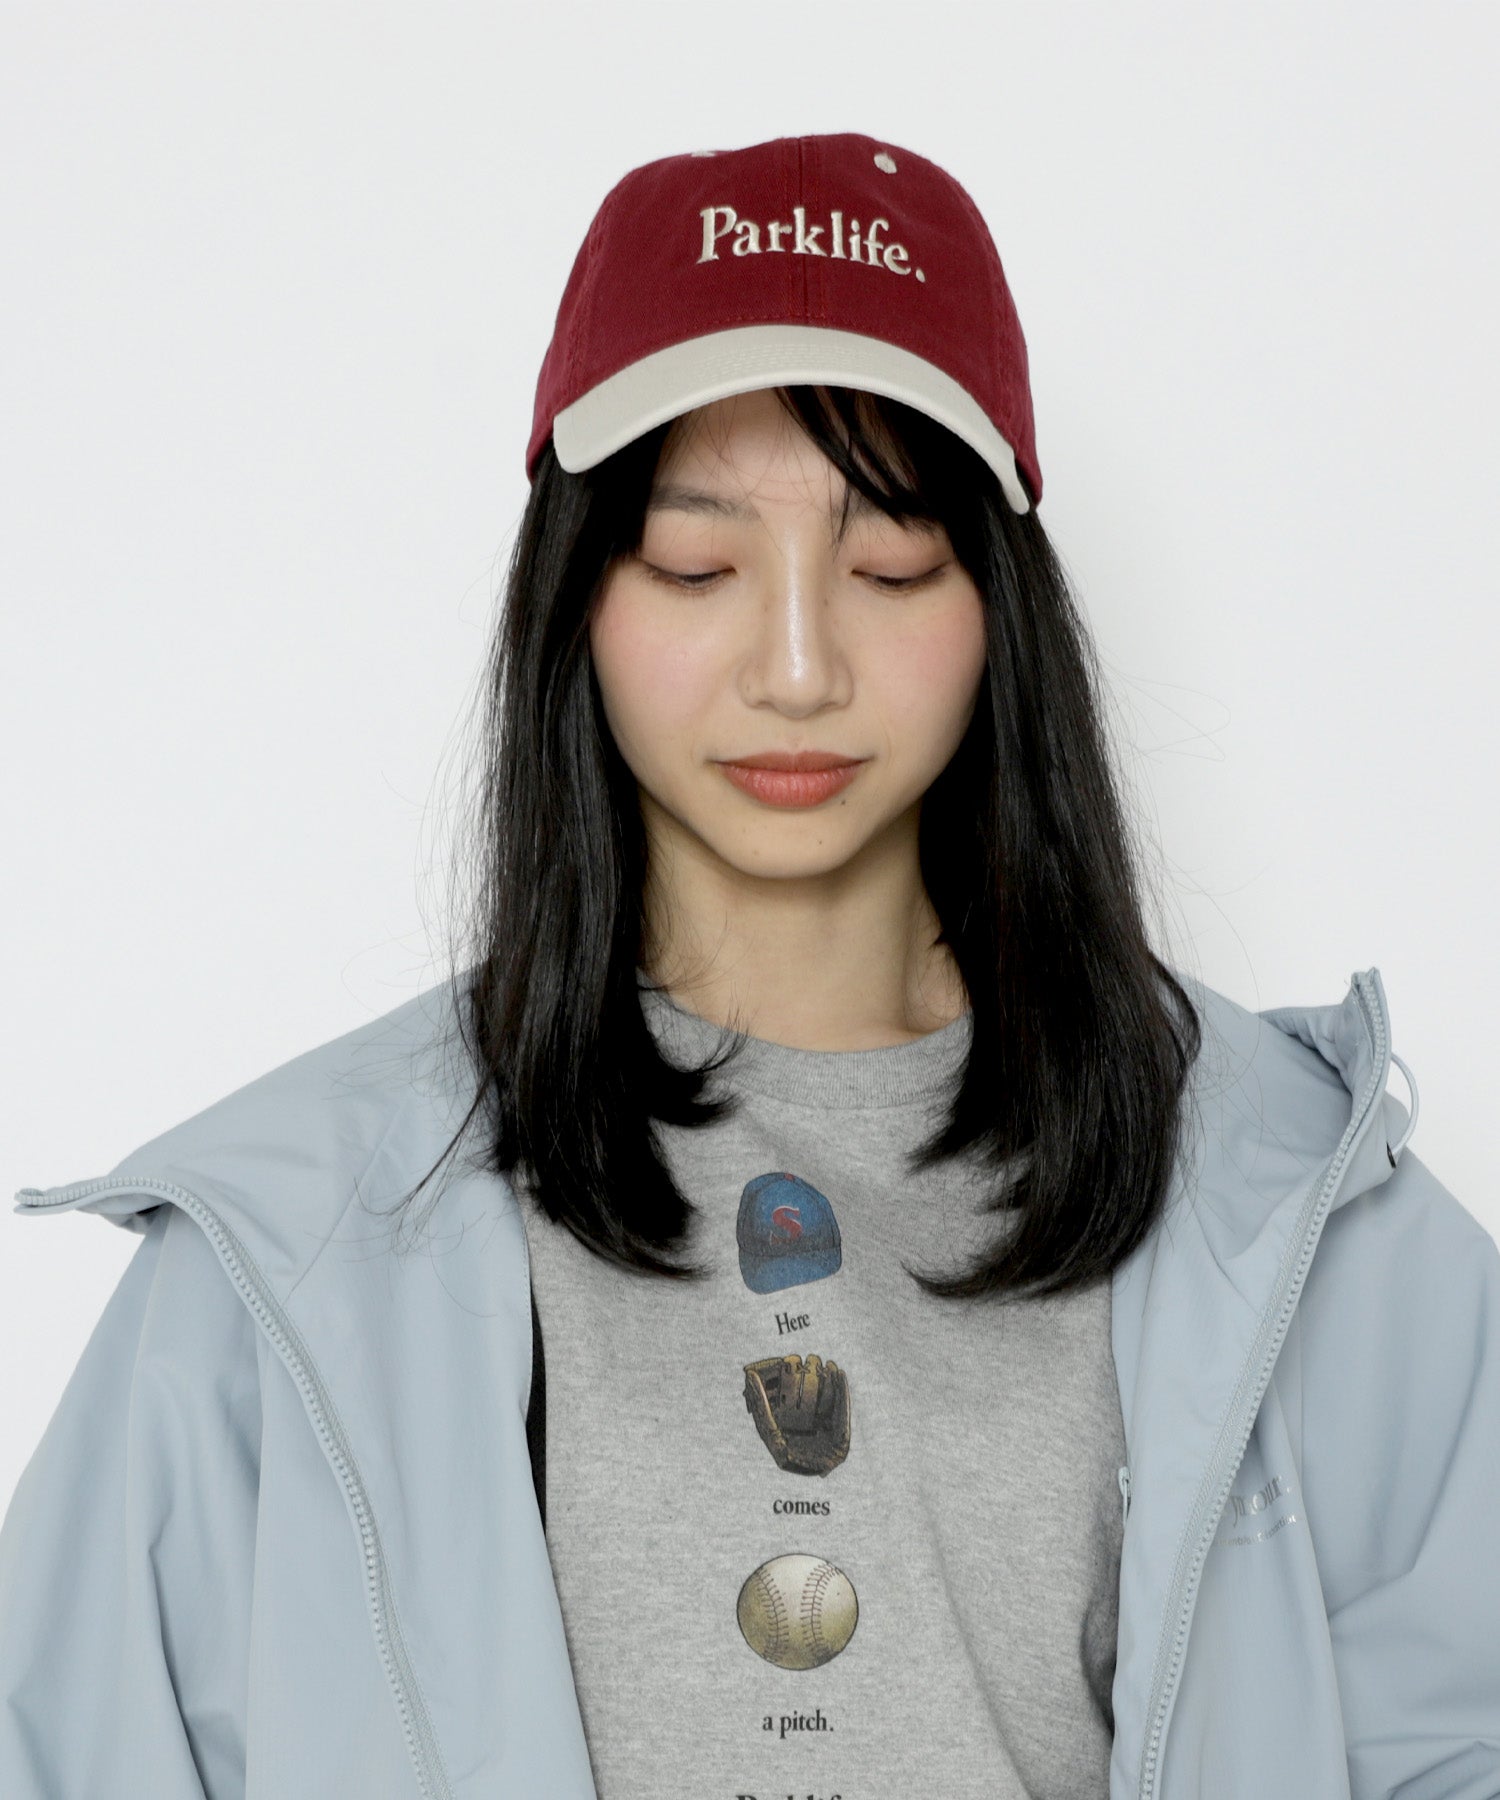 Seymour. "Parklife" EMBROIDERY 2TONE CAP